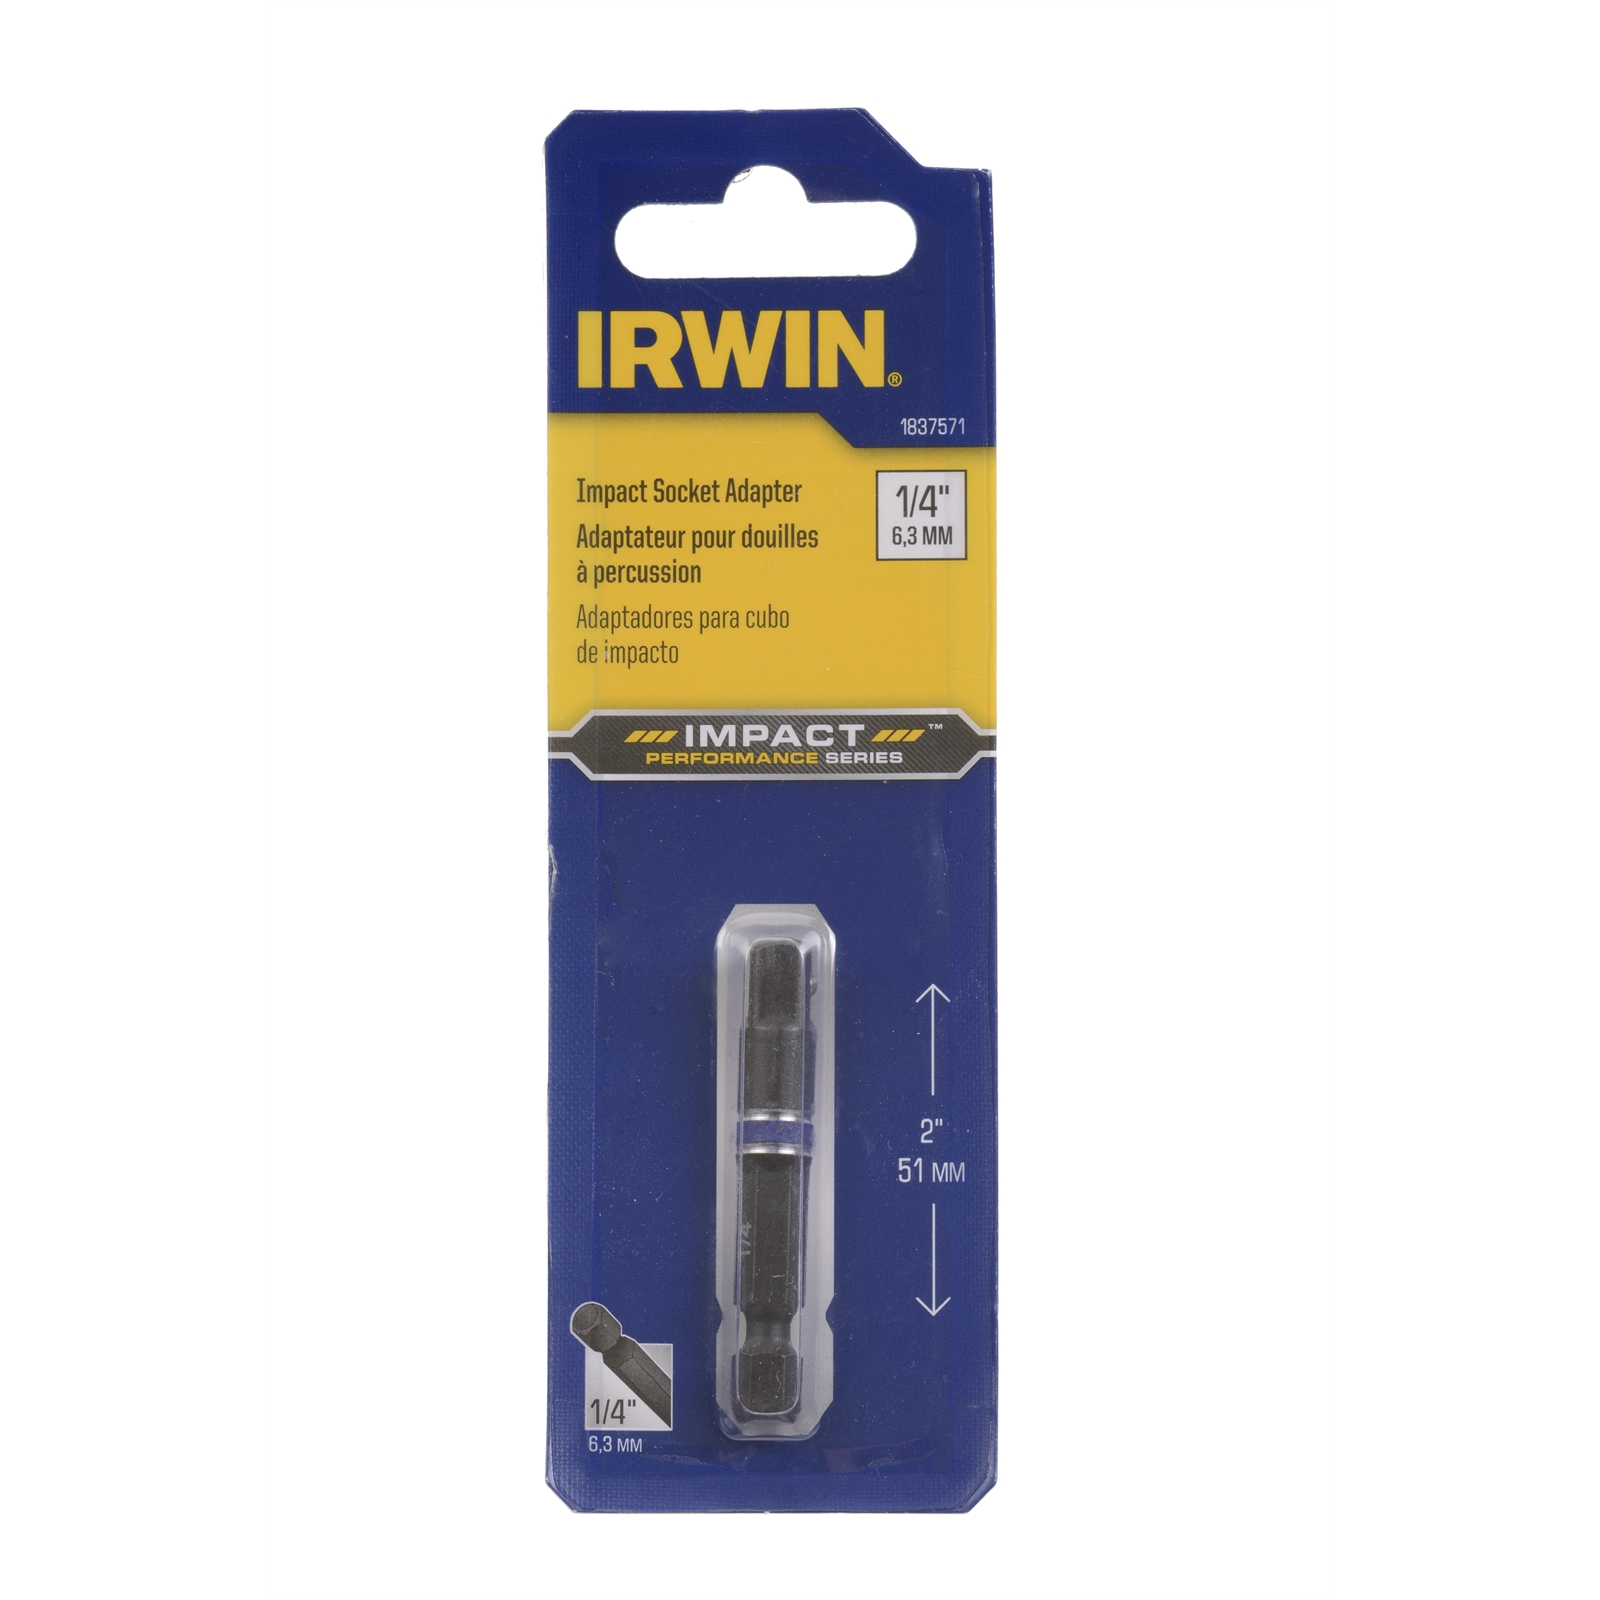 Irwin 50mm 1 / 4" Impact Screwdriver Bit